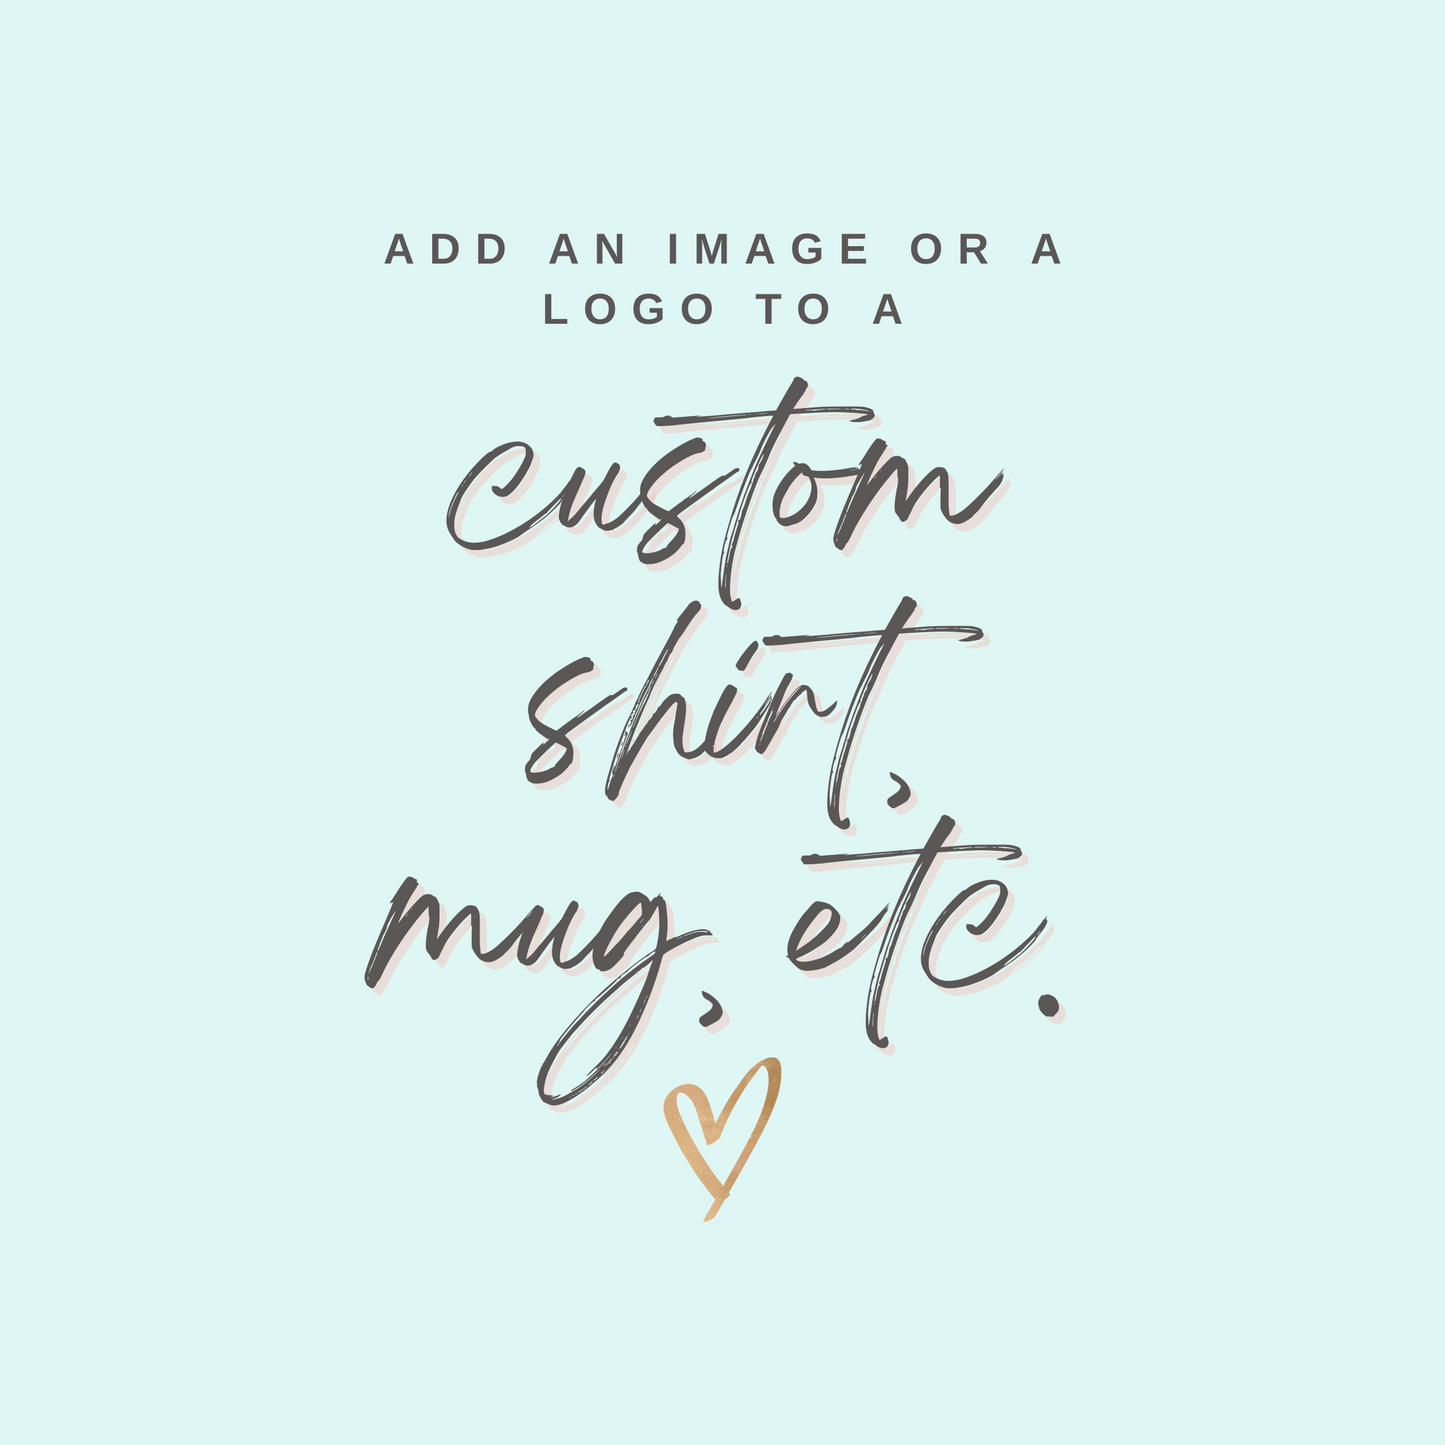 Upgrade: add an image or logo to a custom shirt